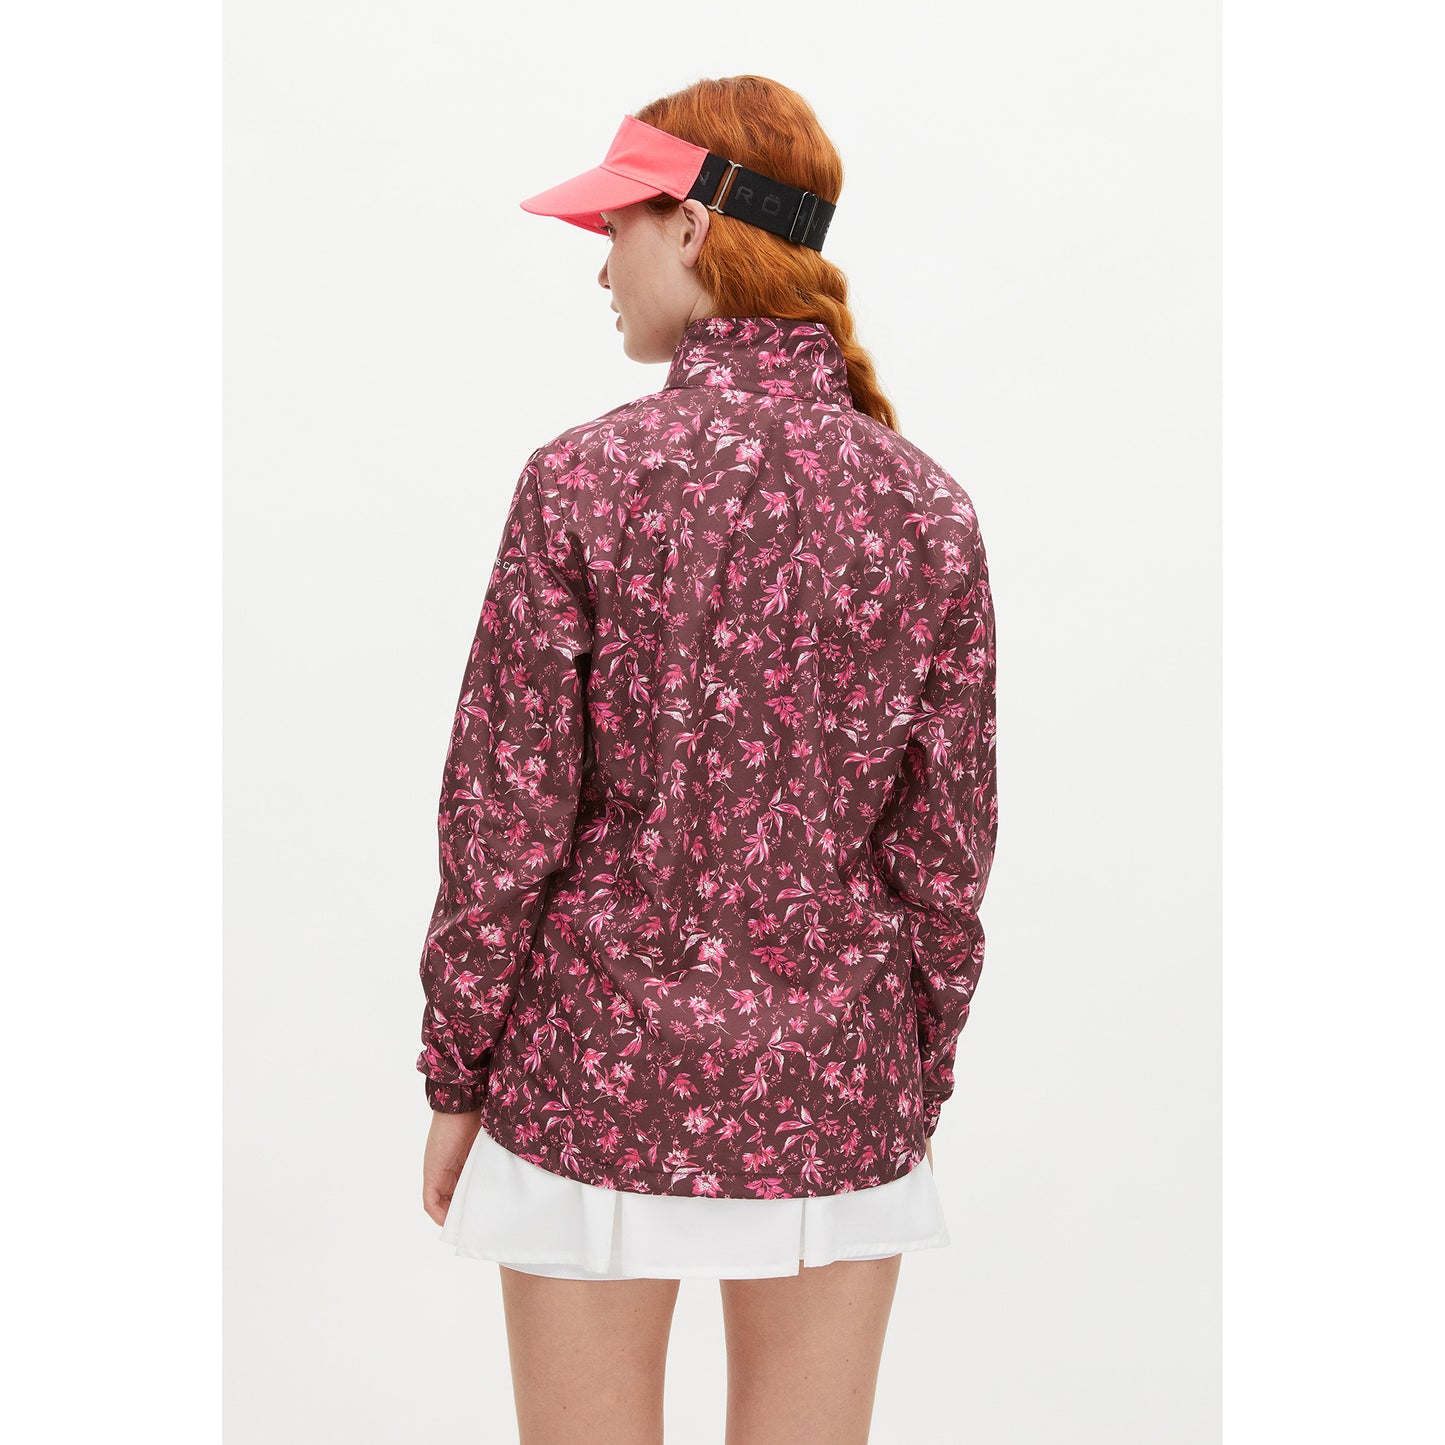 Rohnisch Ladies Packable Wind Jacket in Neon Flower Pink - Last One Medium Only Left